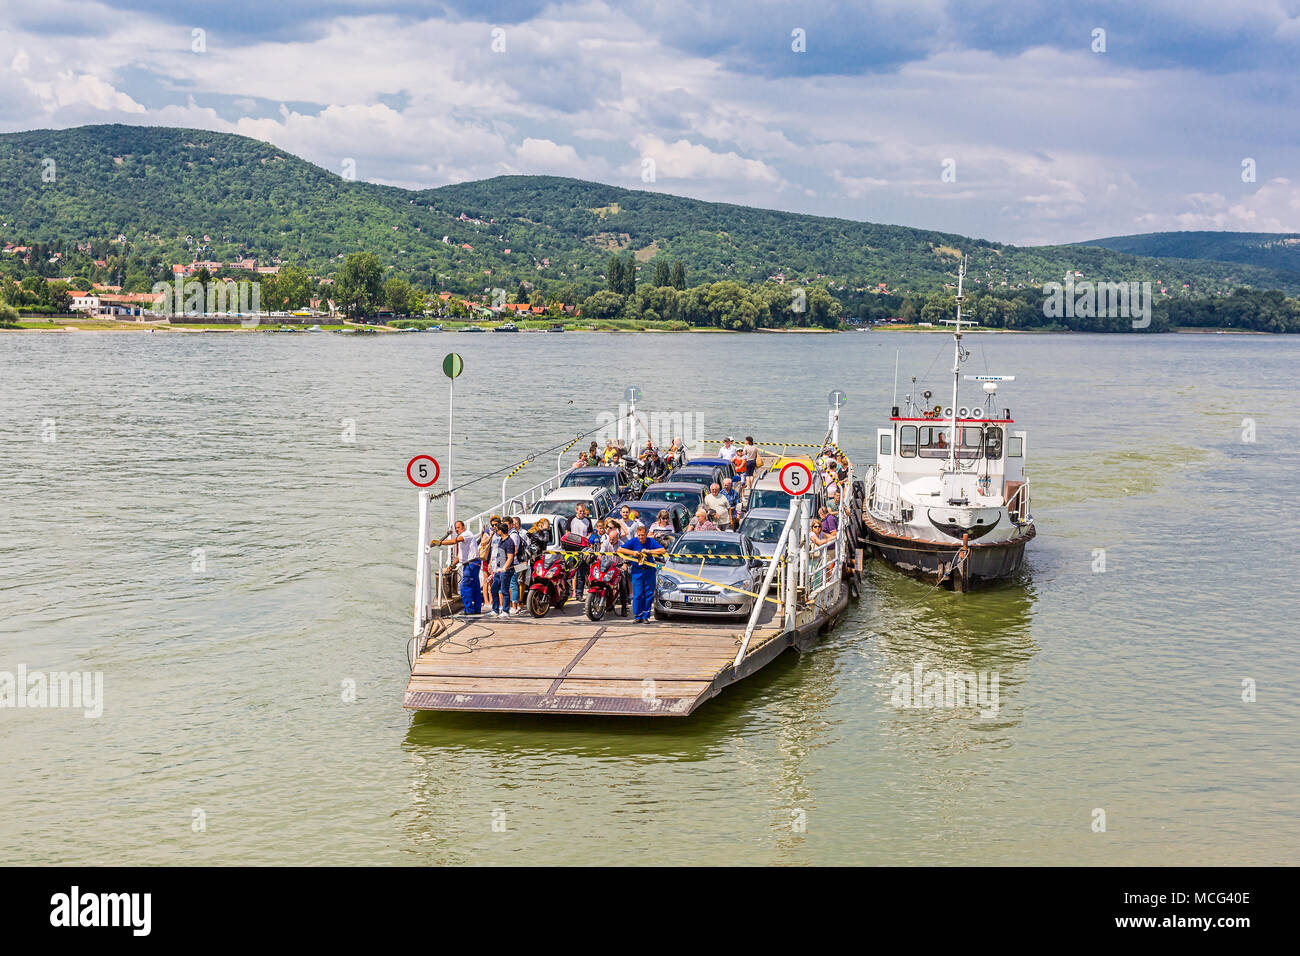 Vac, Hungary. July 16, 2017. Local ferry transportation across Danube river transporting people from Vac town to Tahitotfalu, Szentendre island, Hunga Stock Photo